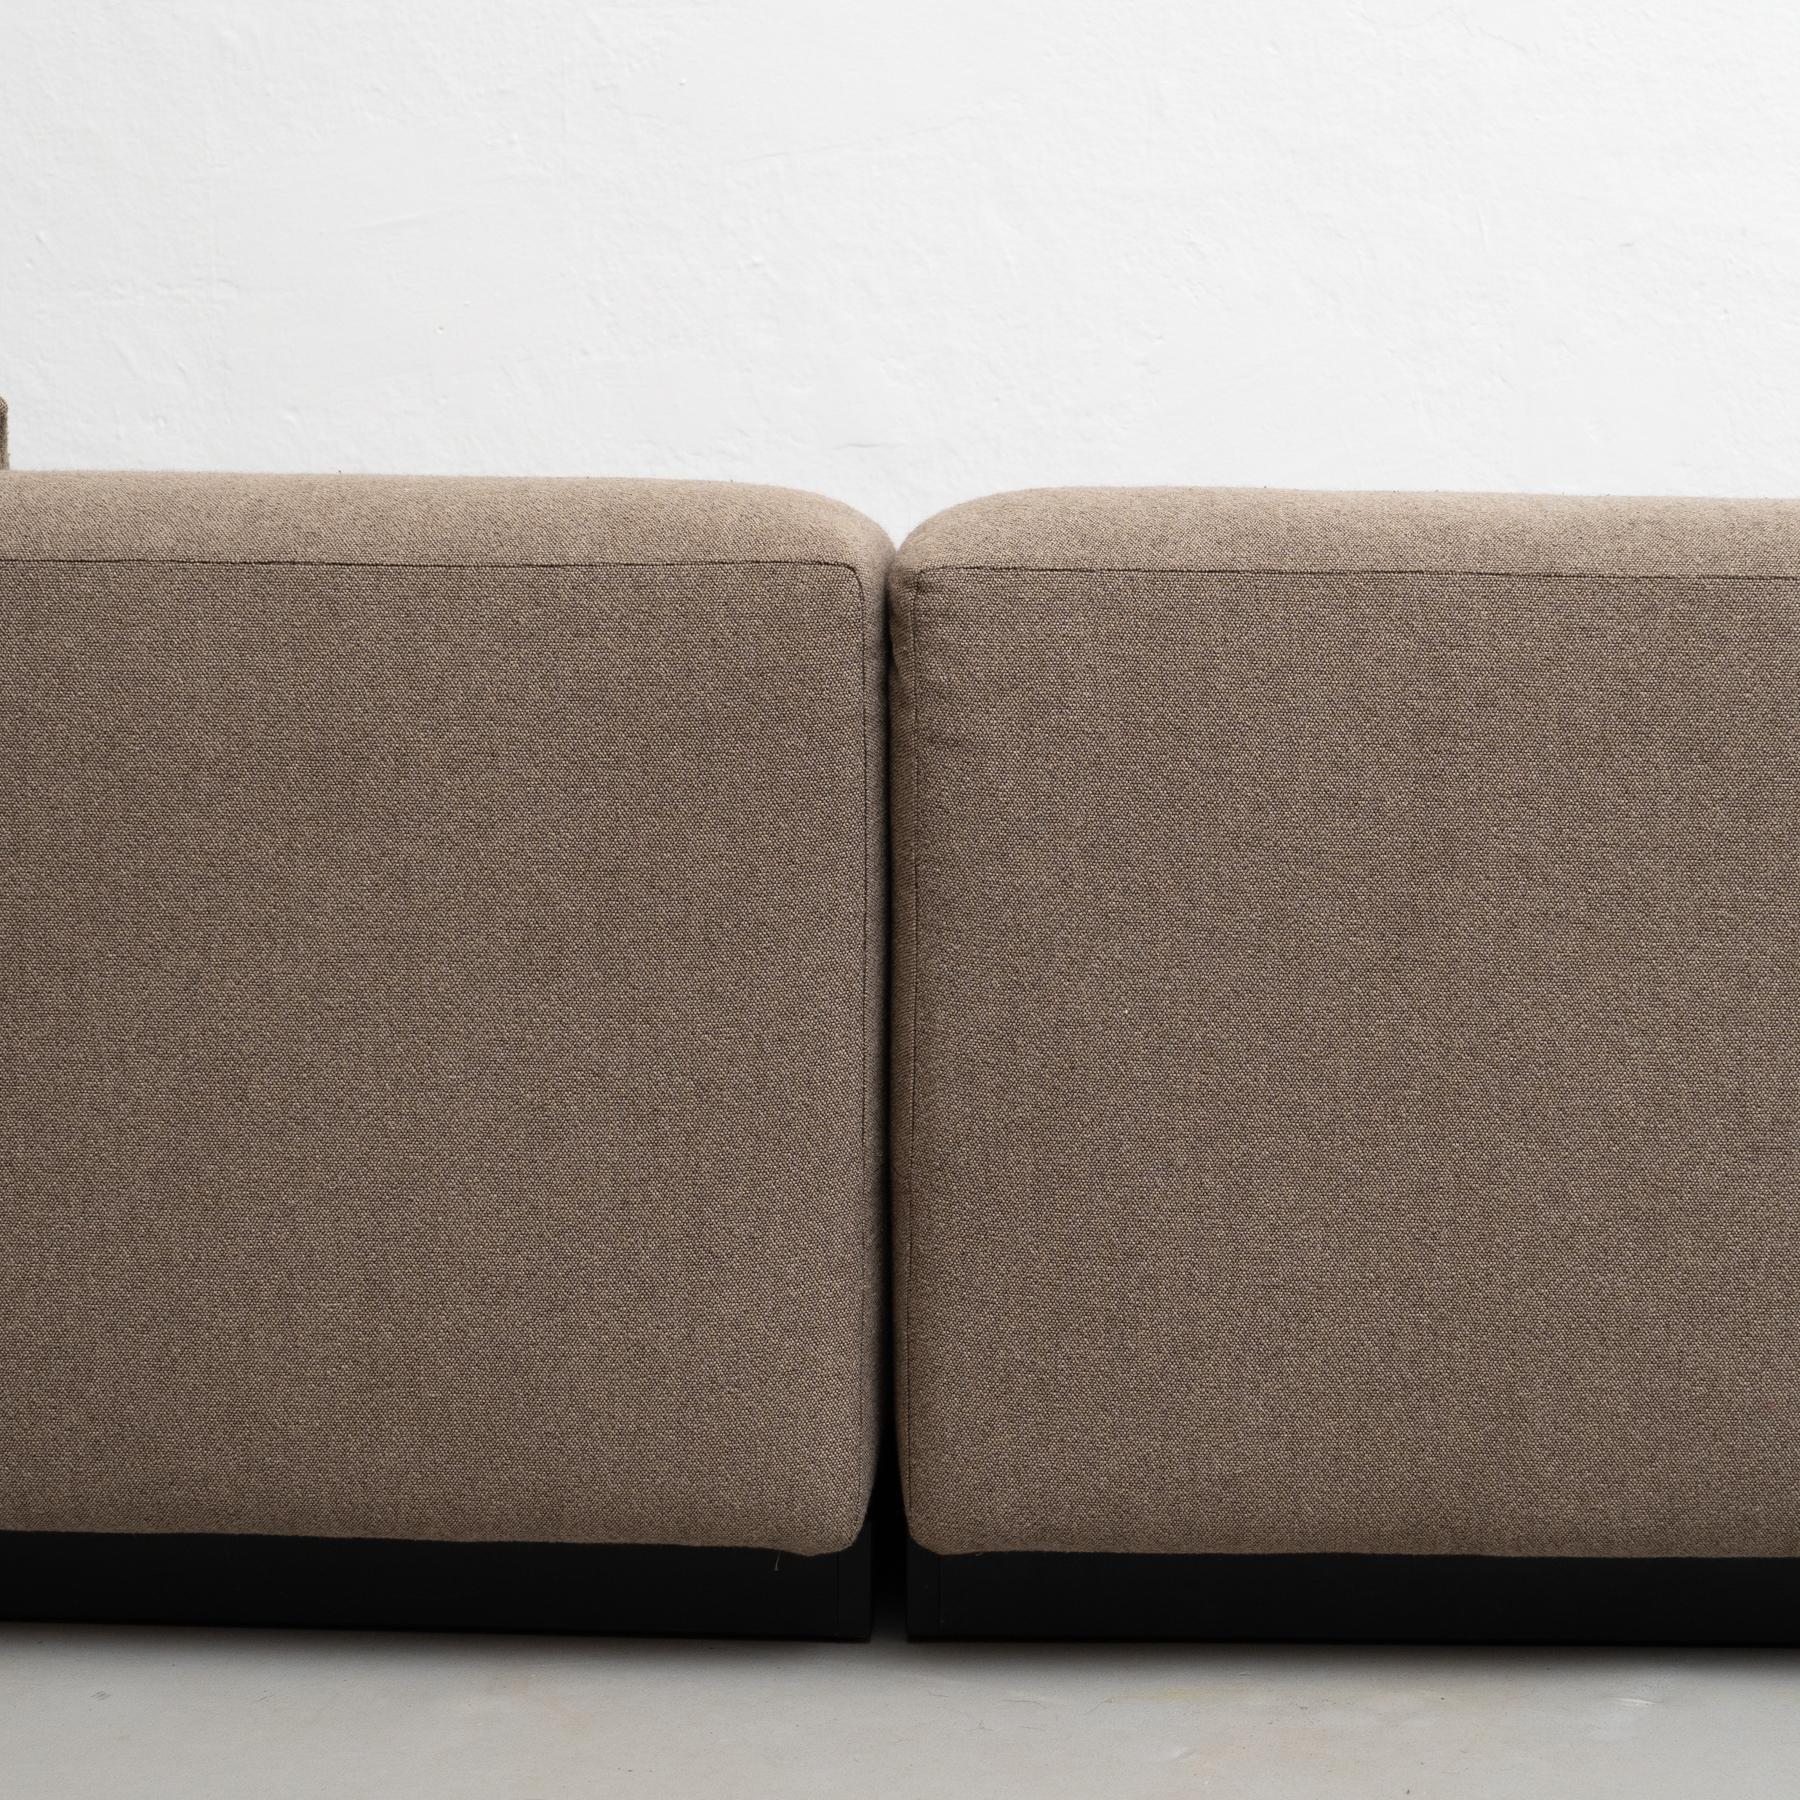 Jasper Morrison Sofa and Otomman Soft Modular Sofa by Vitra In Good Condition For Sale In Barcelona, Barcelona